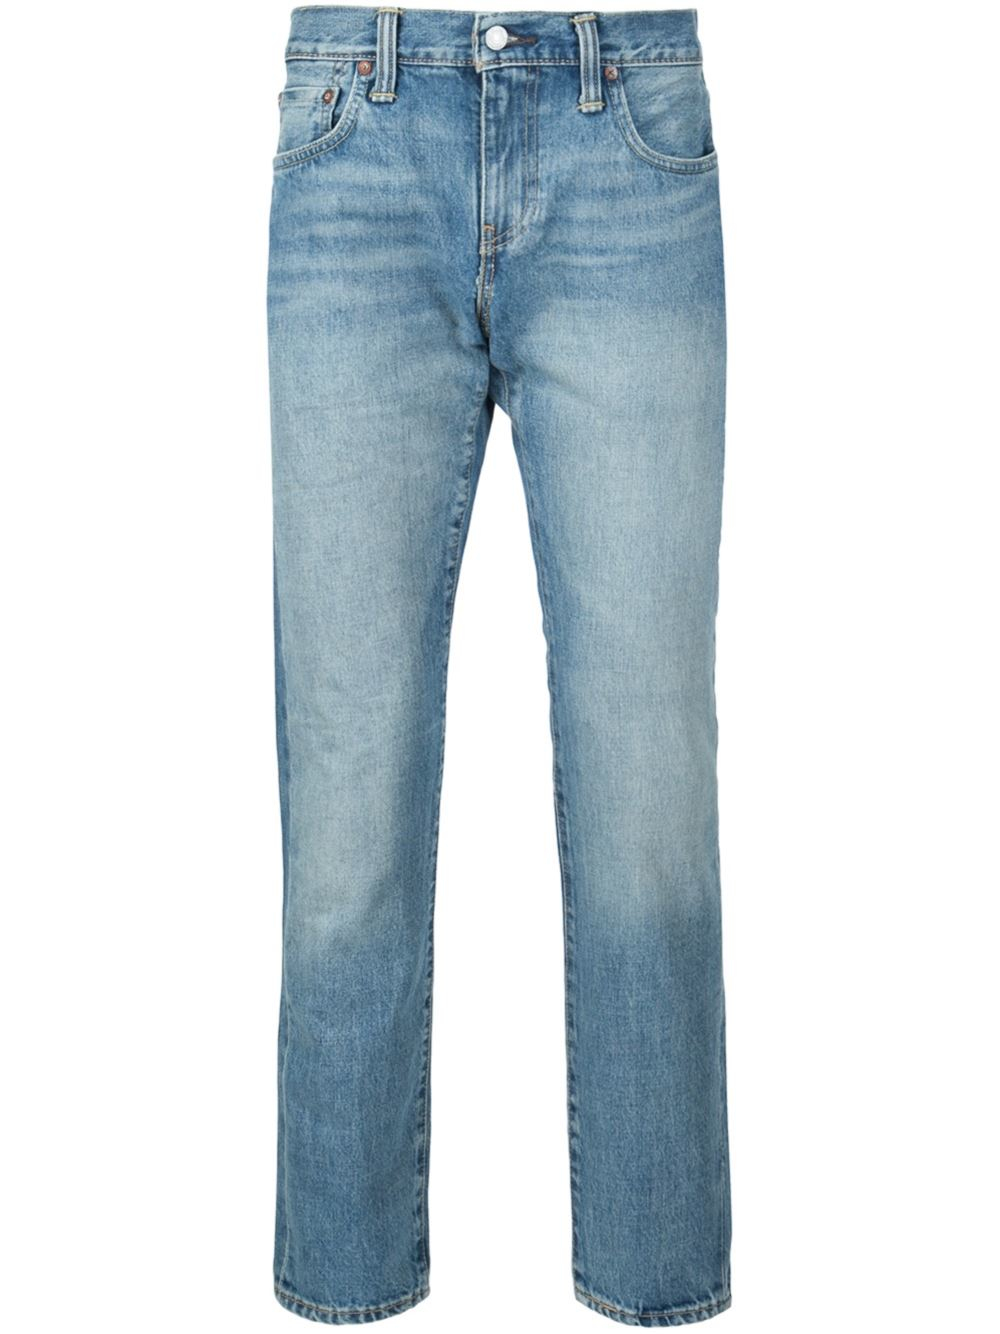 Lyst Levis Stonewashed Regular Jeans In Blue For Men